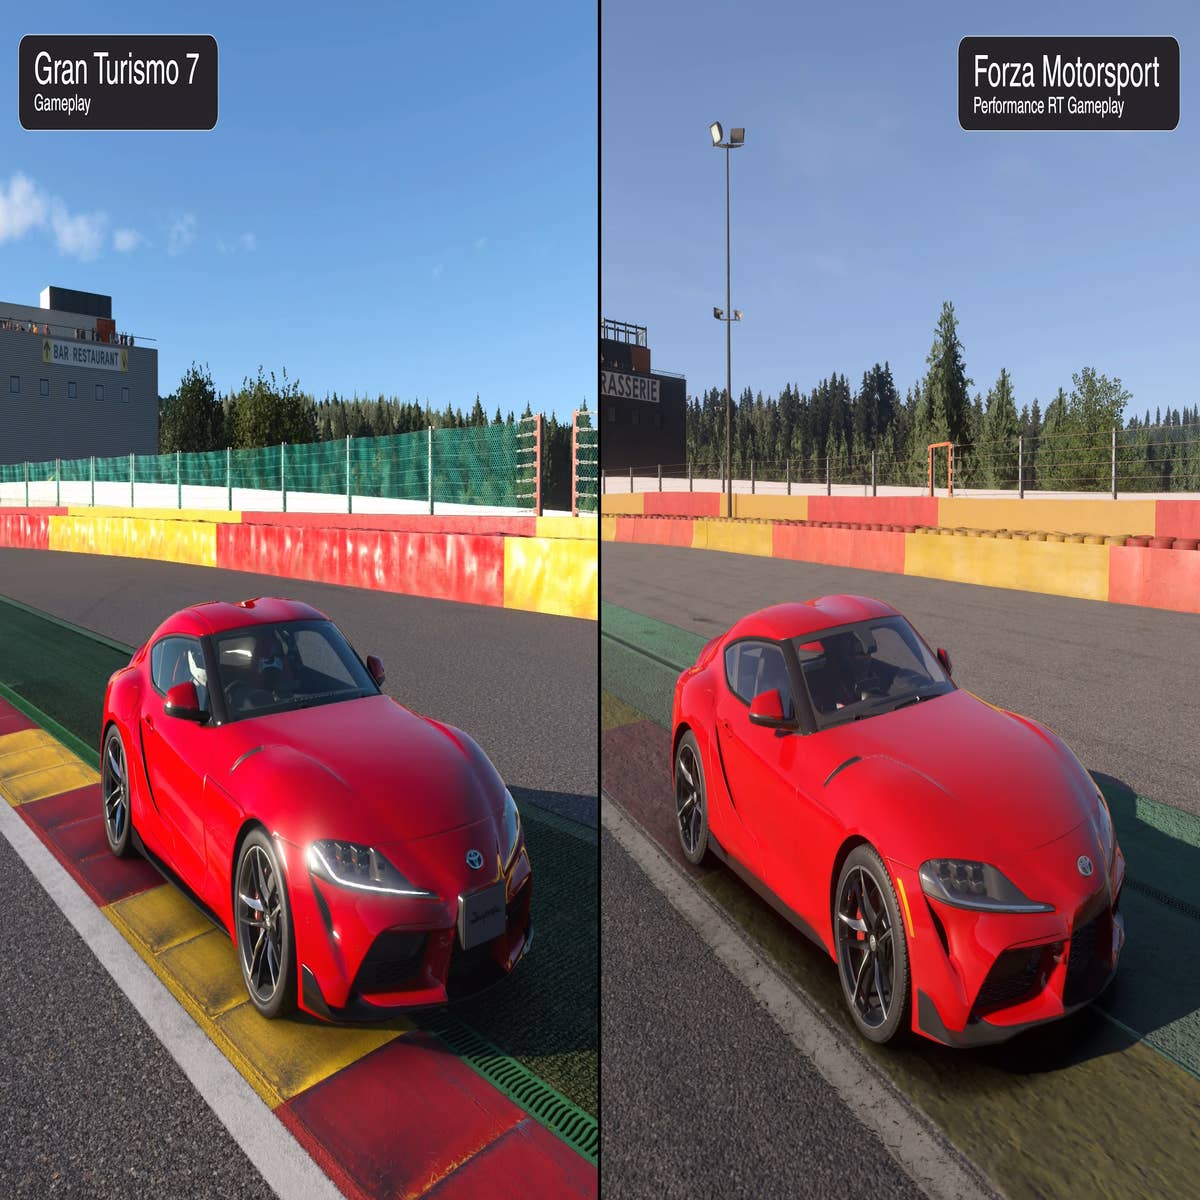 Digital Foundry vs Forza Motorsport 6